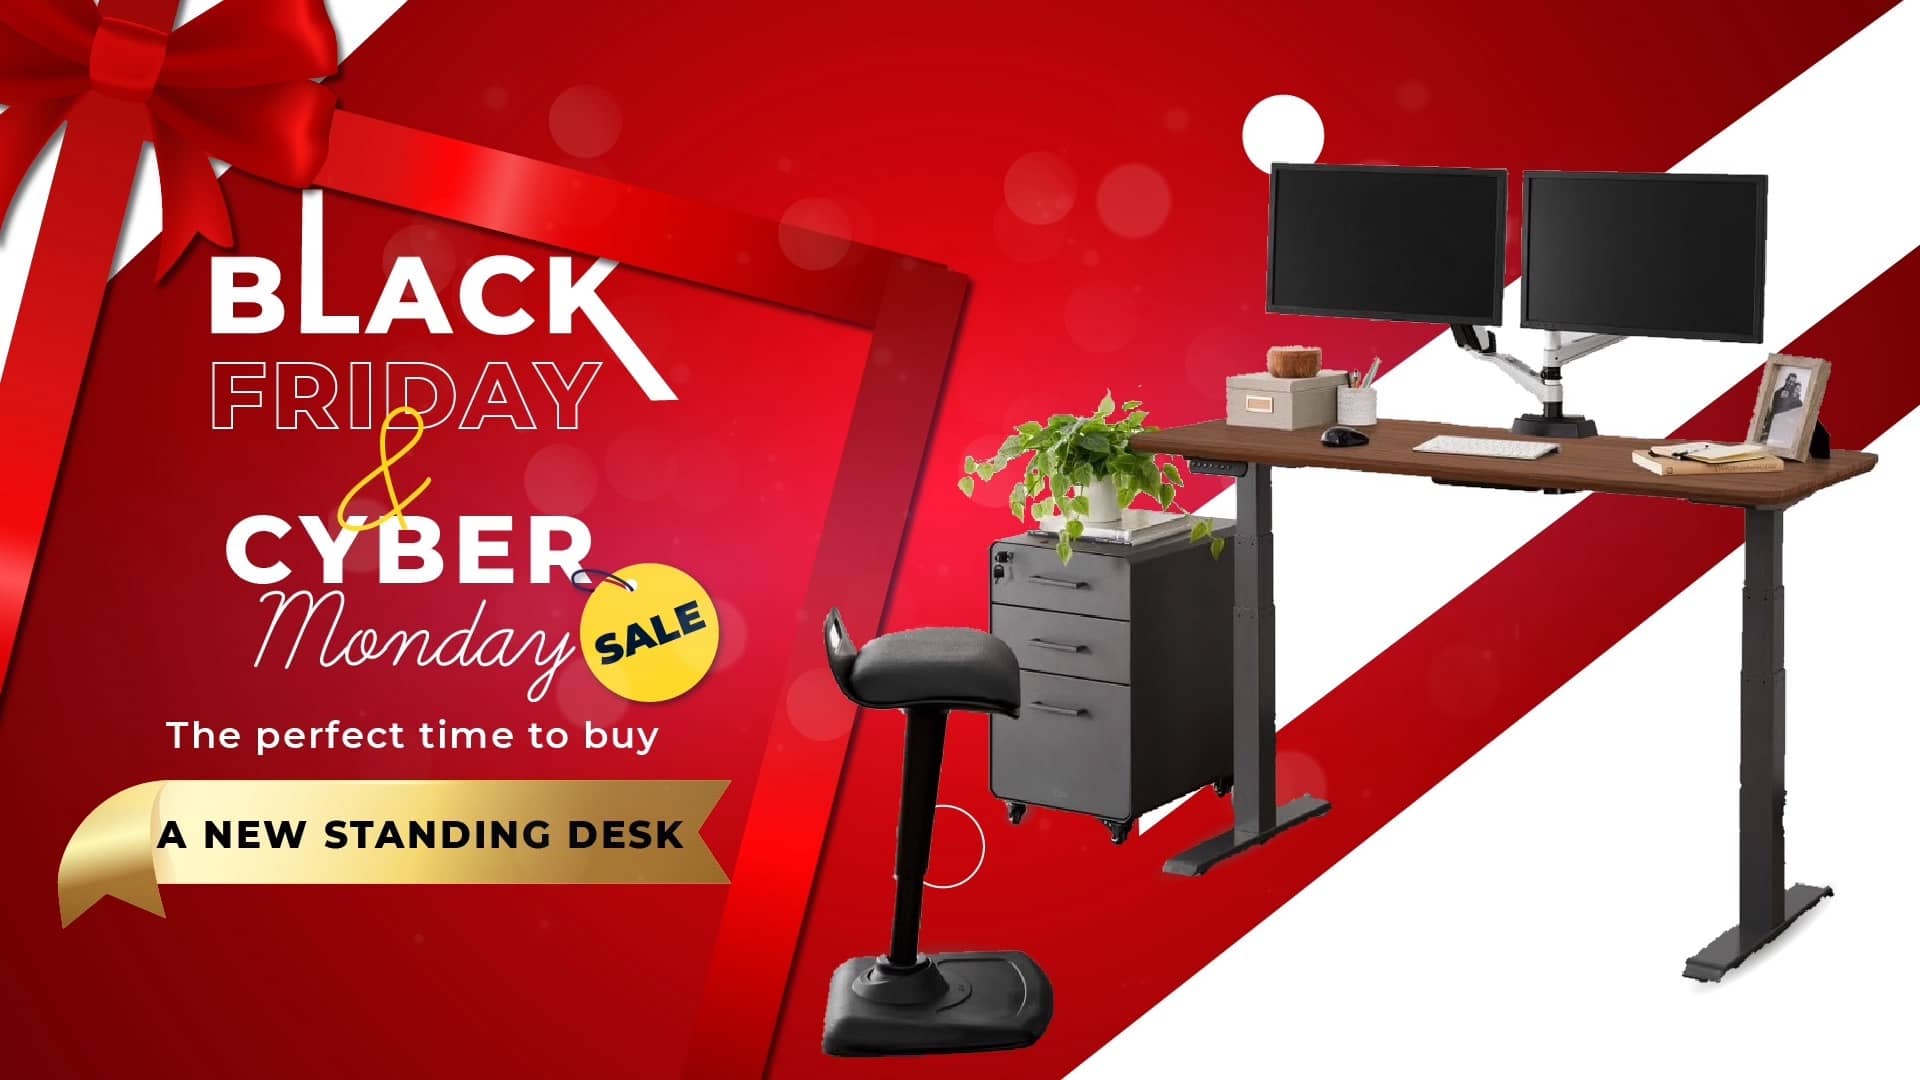 Black Friday standing desk deals